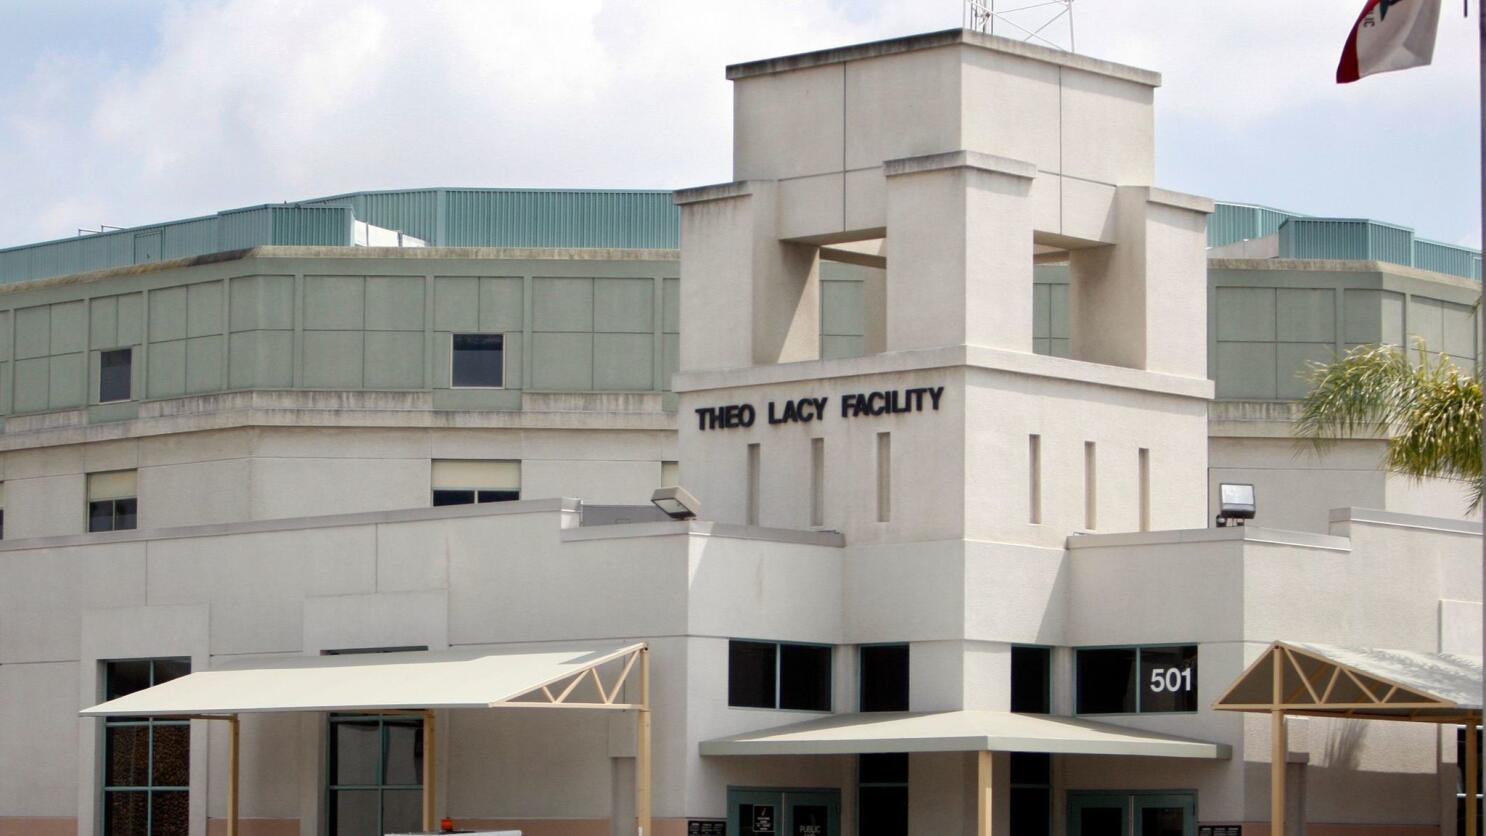 Theo Lacy Jail Facility